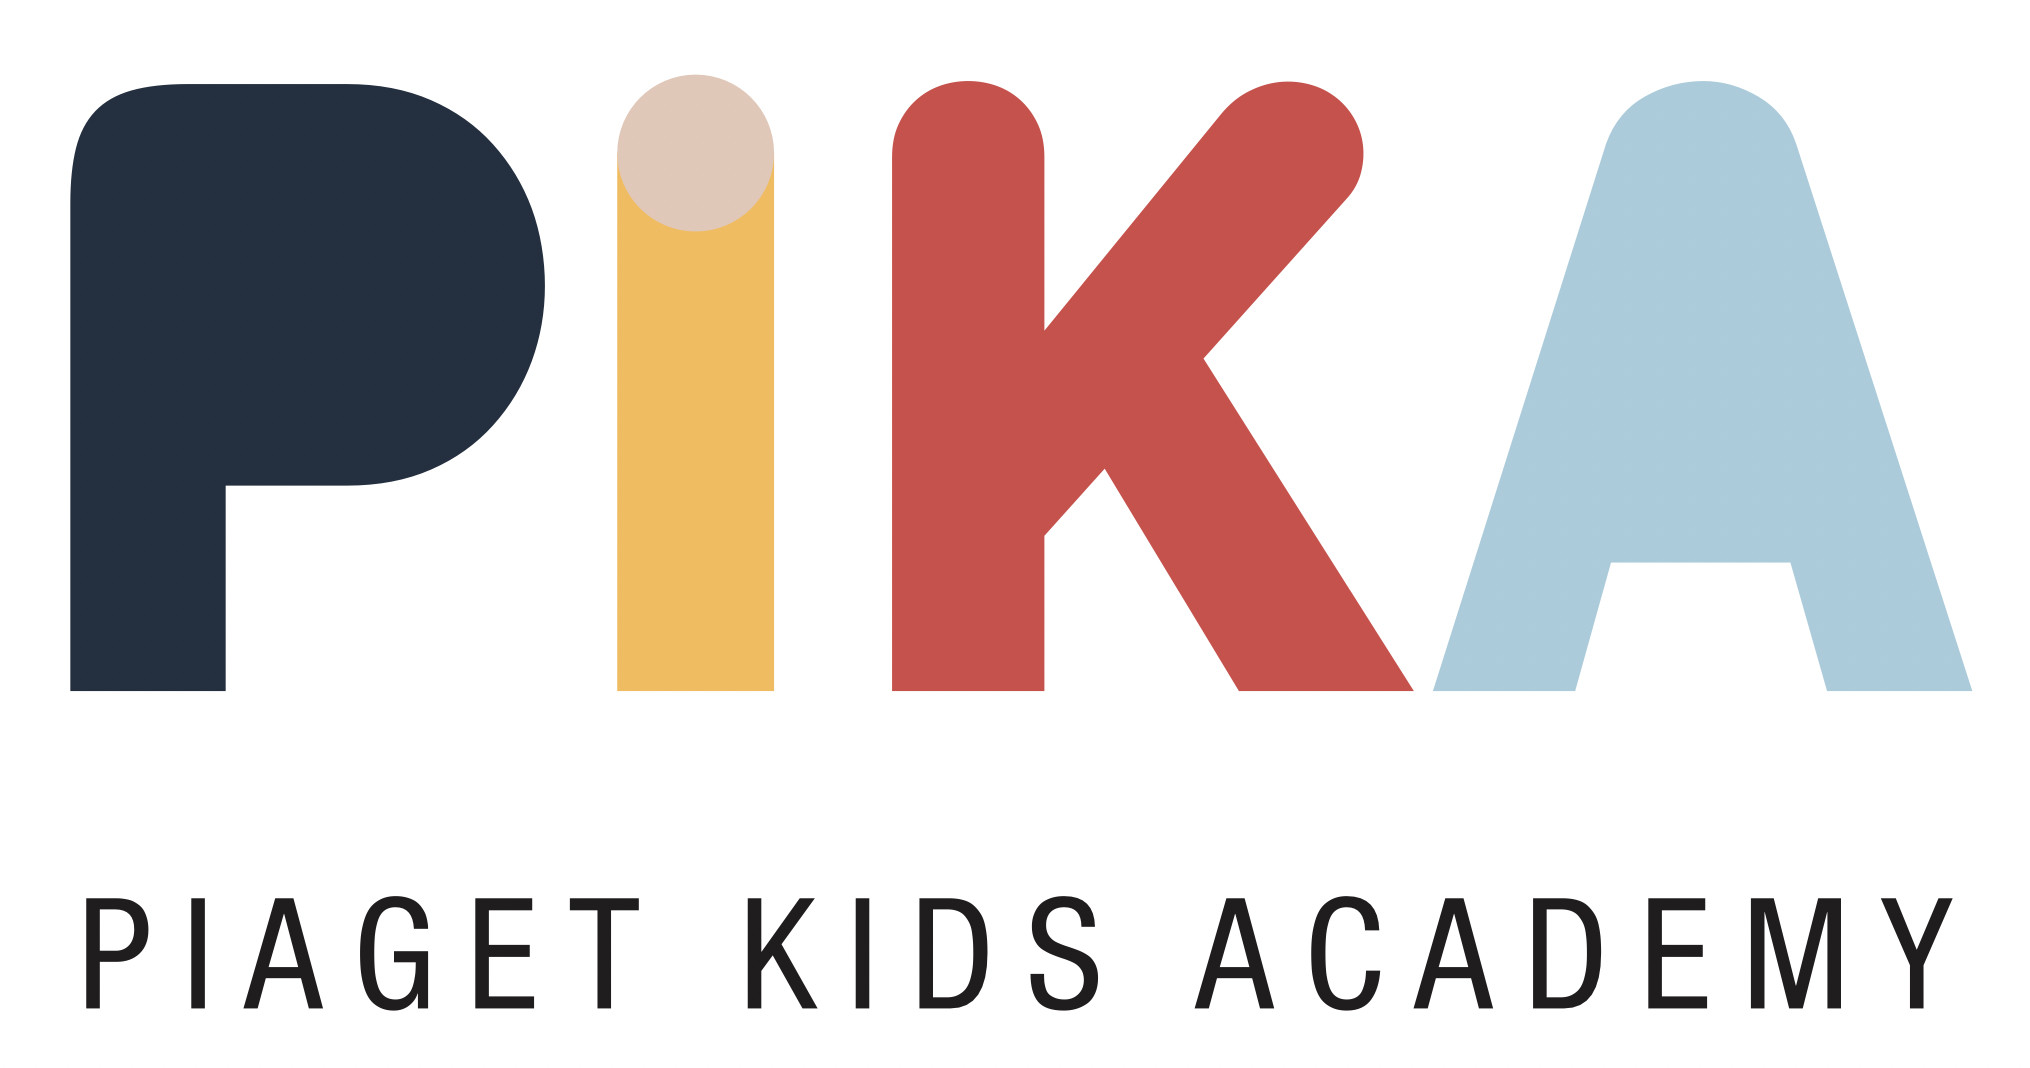 Piaget Kids Academy